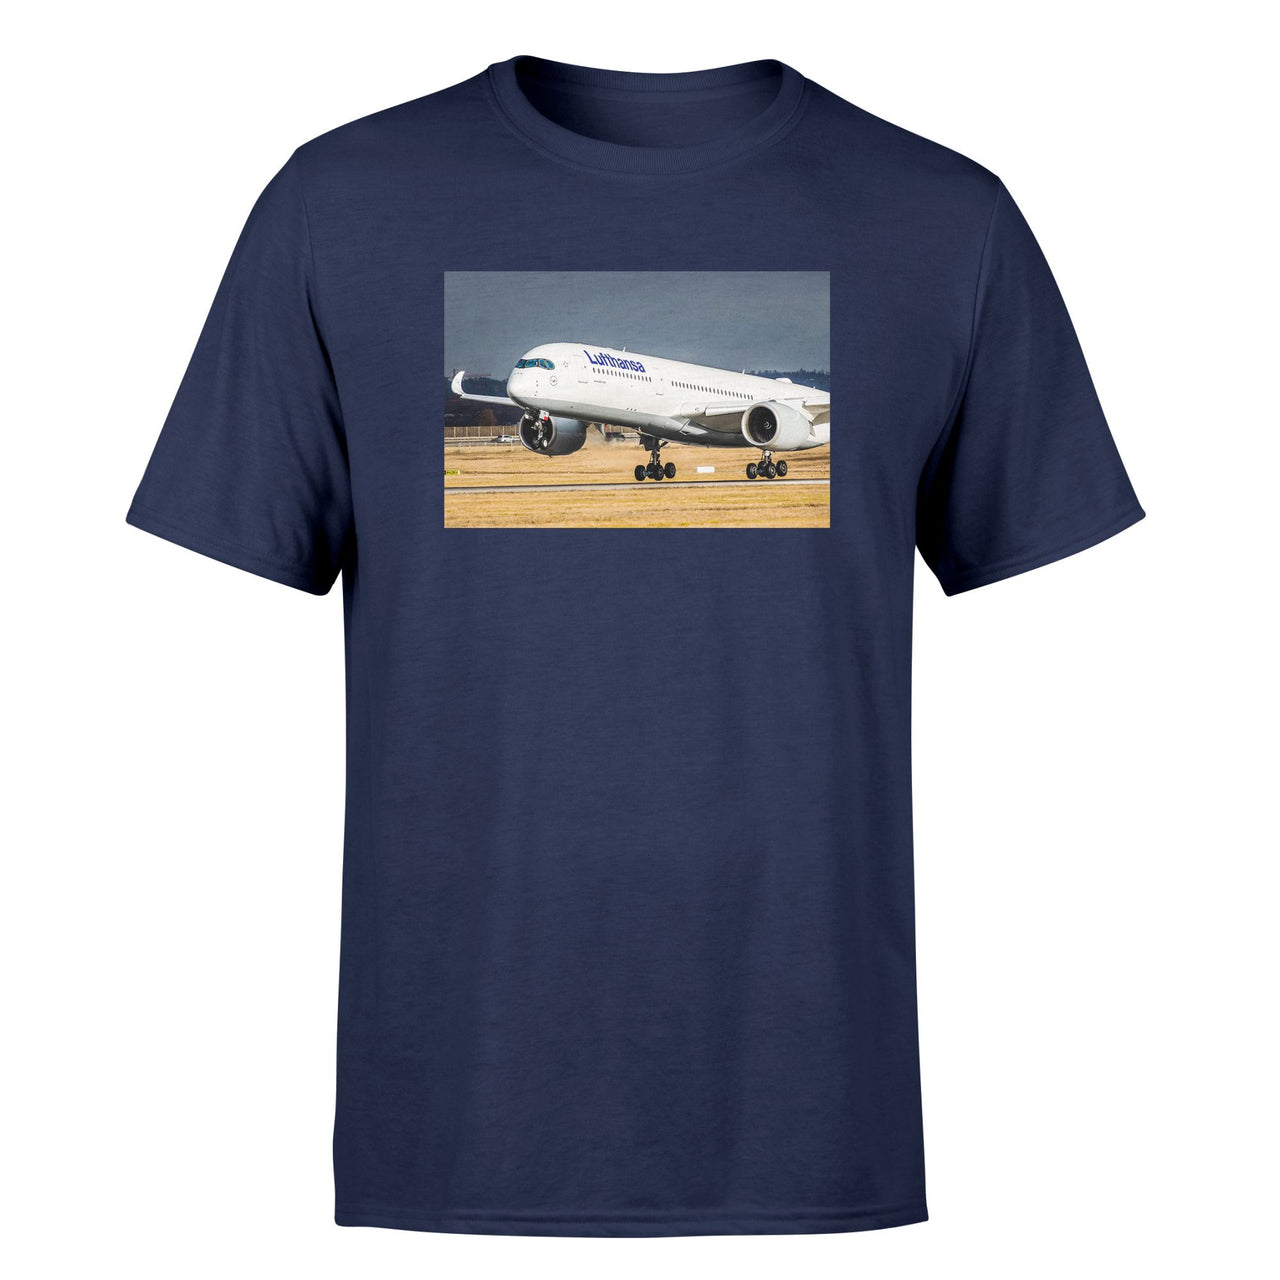 Lutfhansa A350 Designed T-Shirts